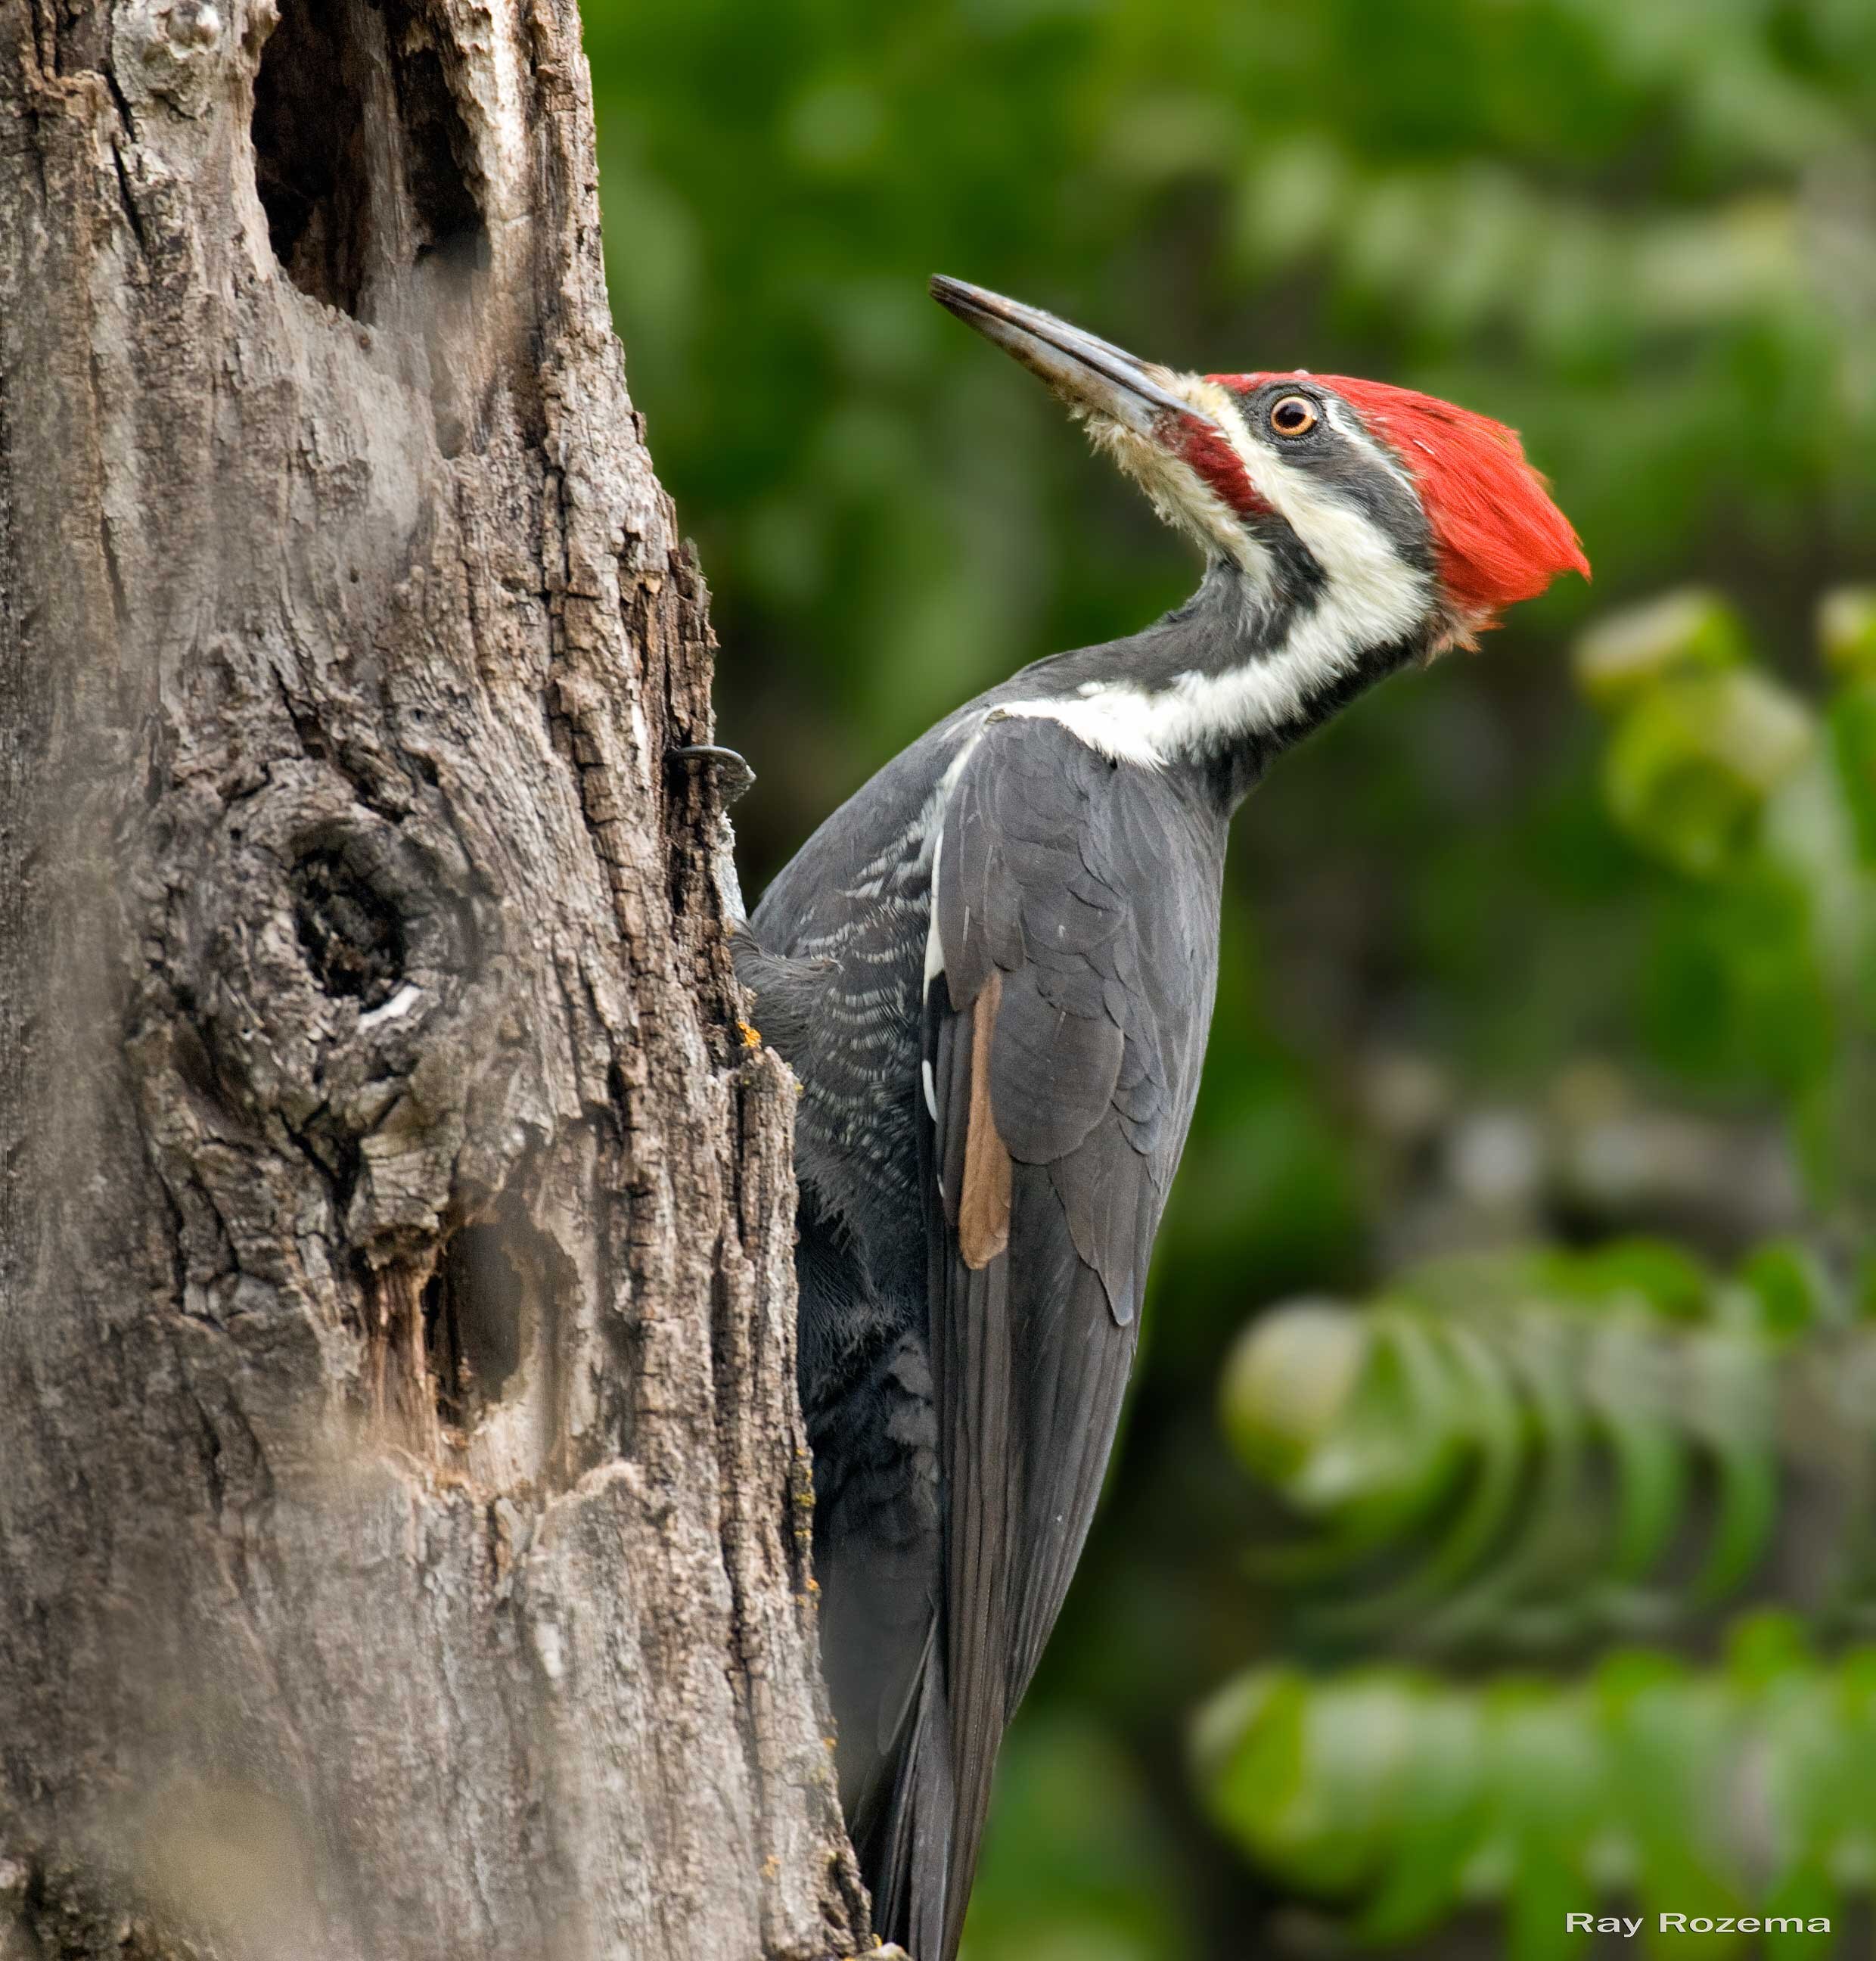 Pileated Woodpecker, Male